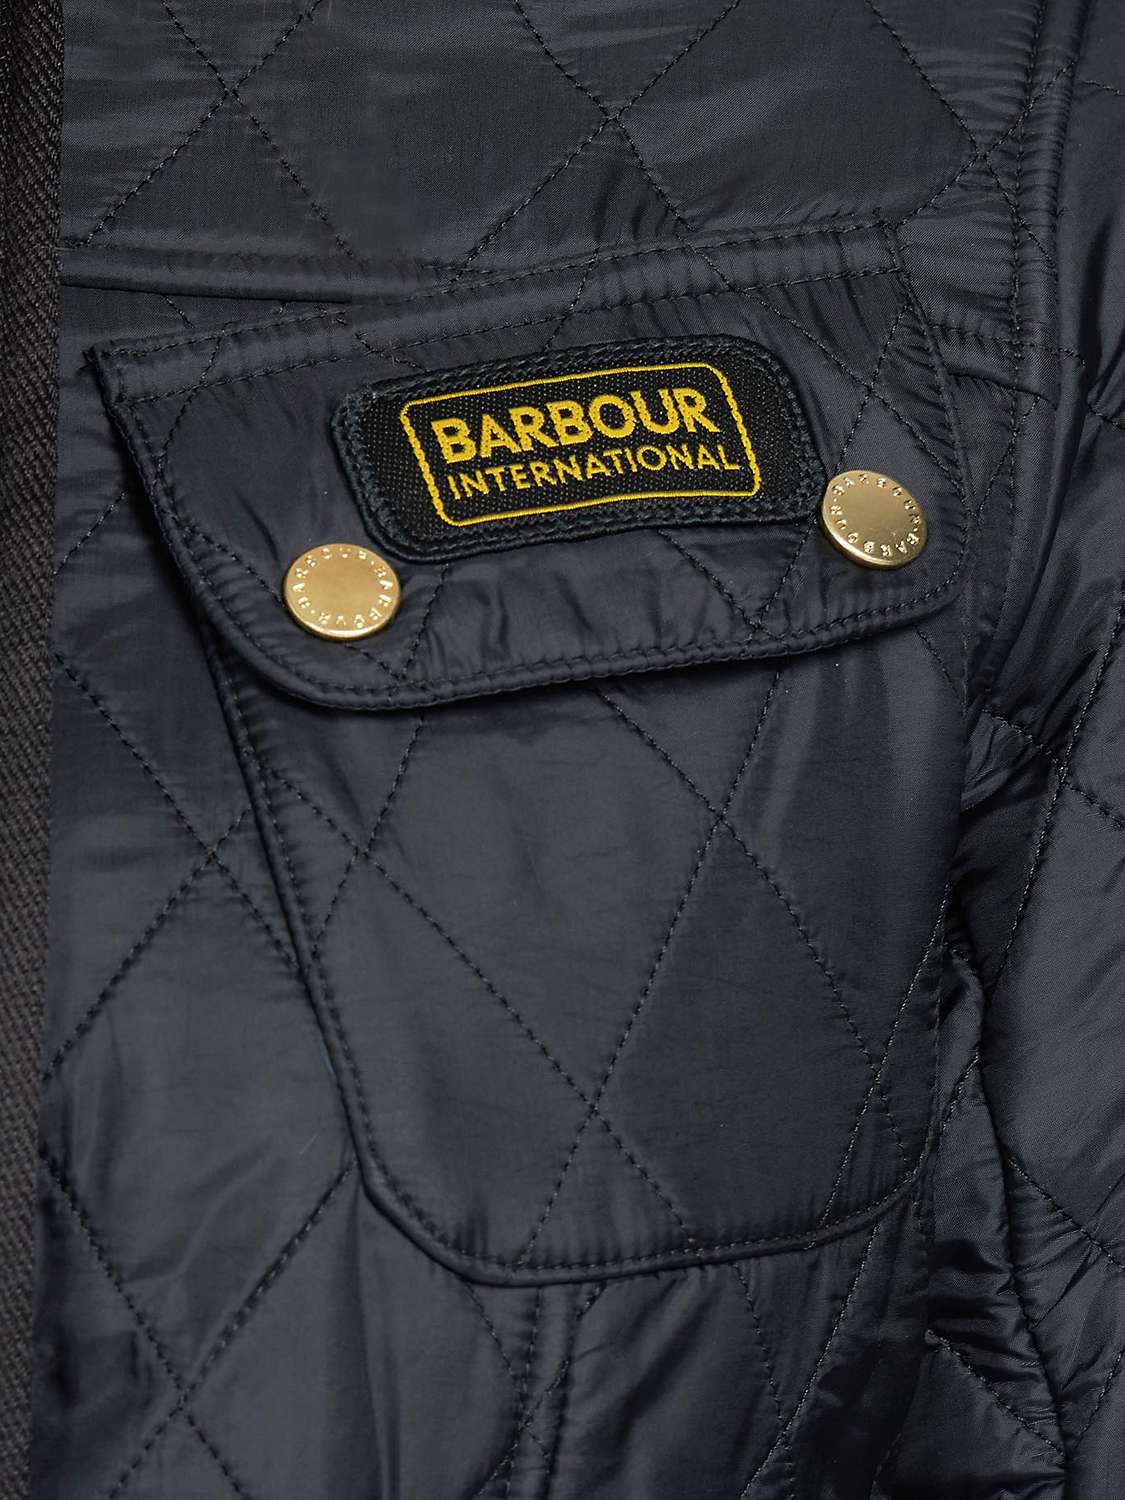 Buy Barbour International Polar Quilted Jacket Online at johnlewis.com